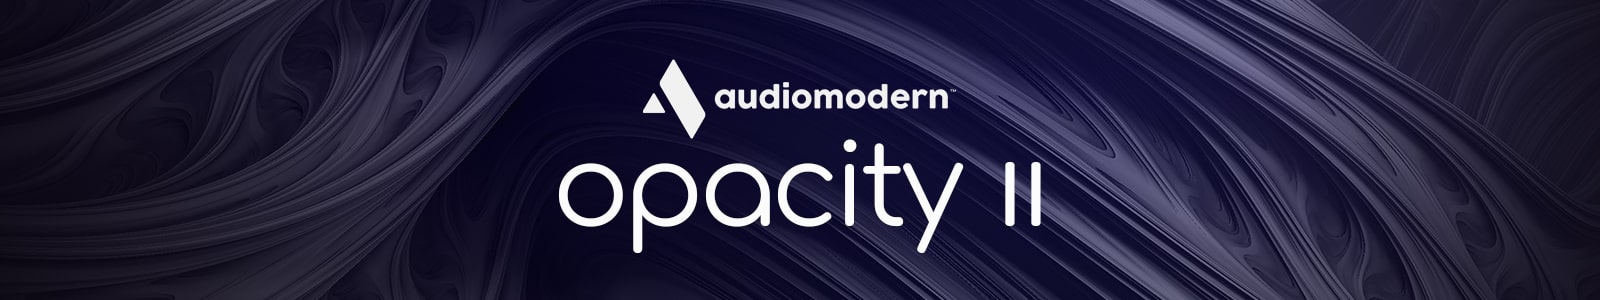 opacity ii by audiomodern